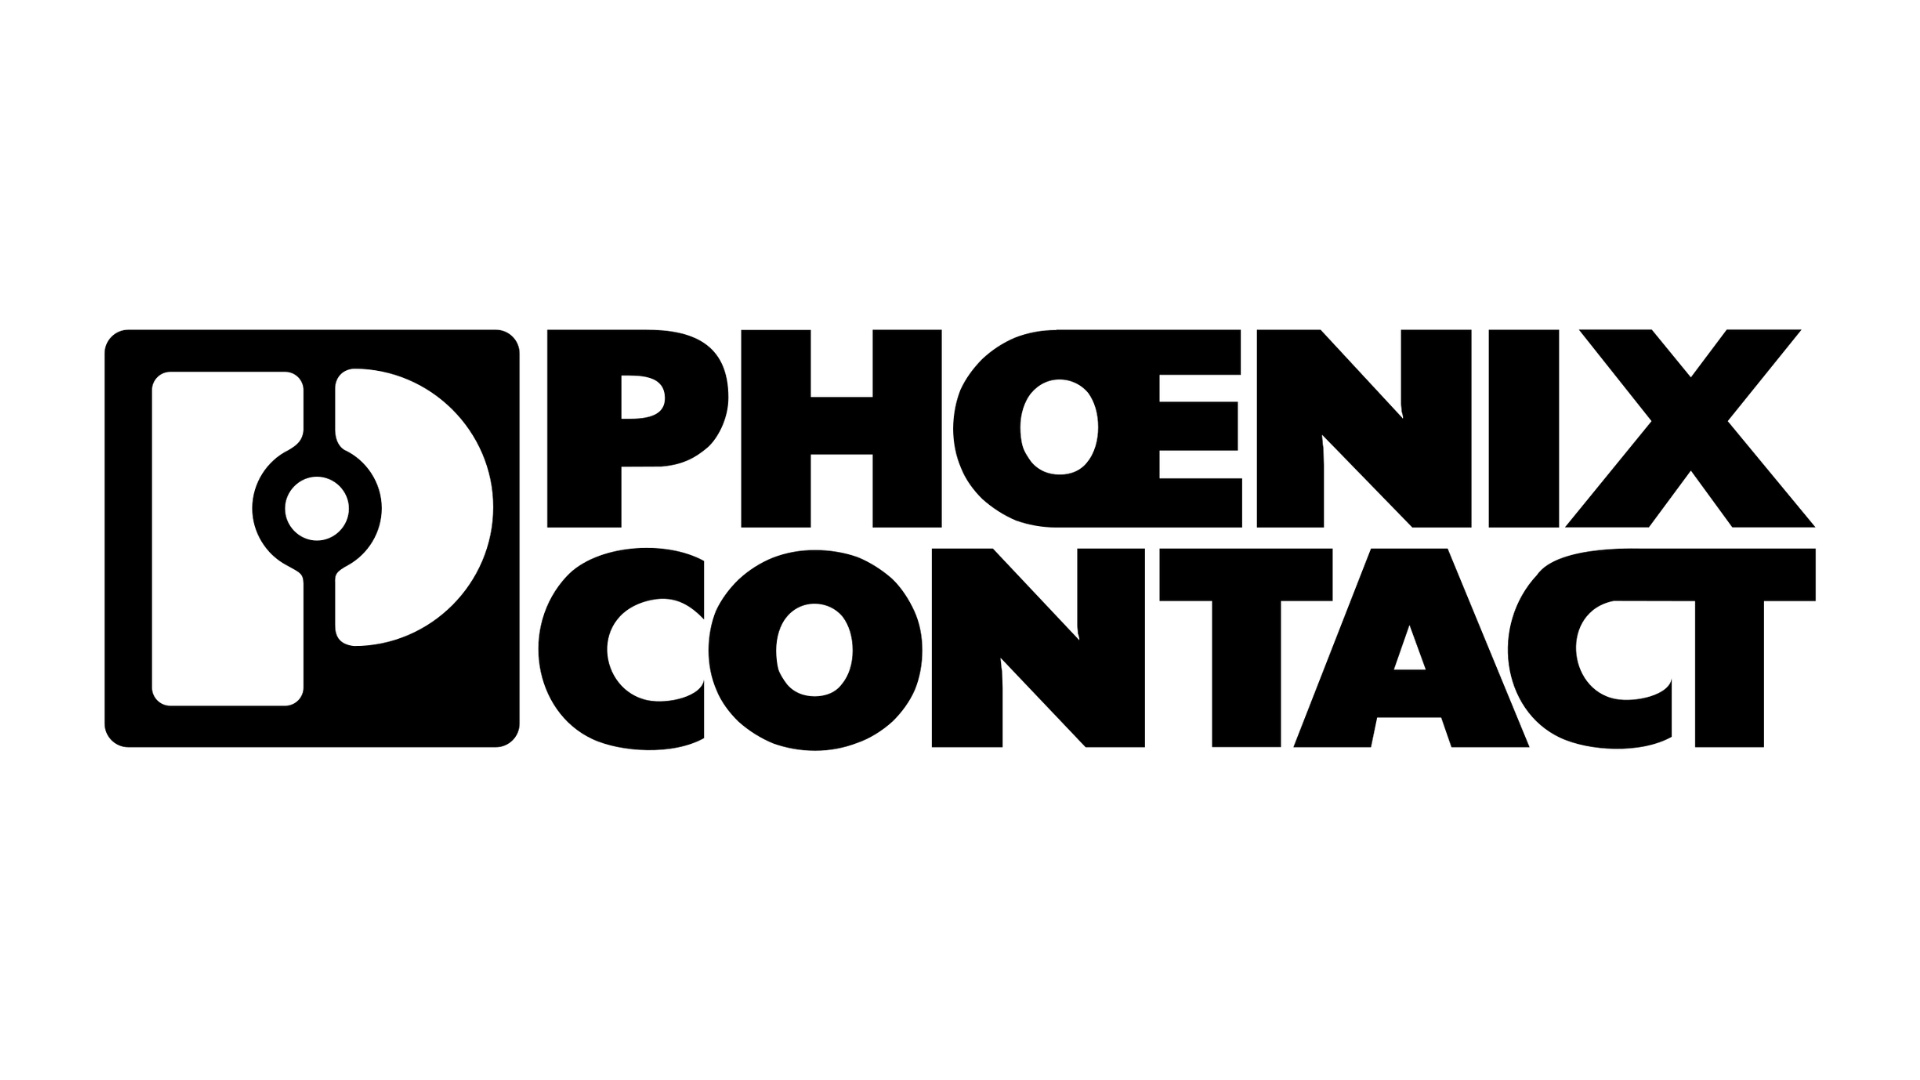 Phoenix Contact logo. Black bolded text.